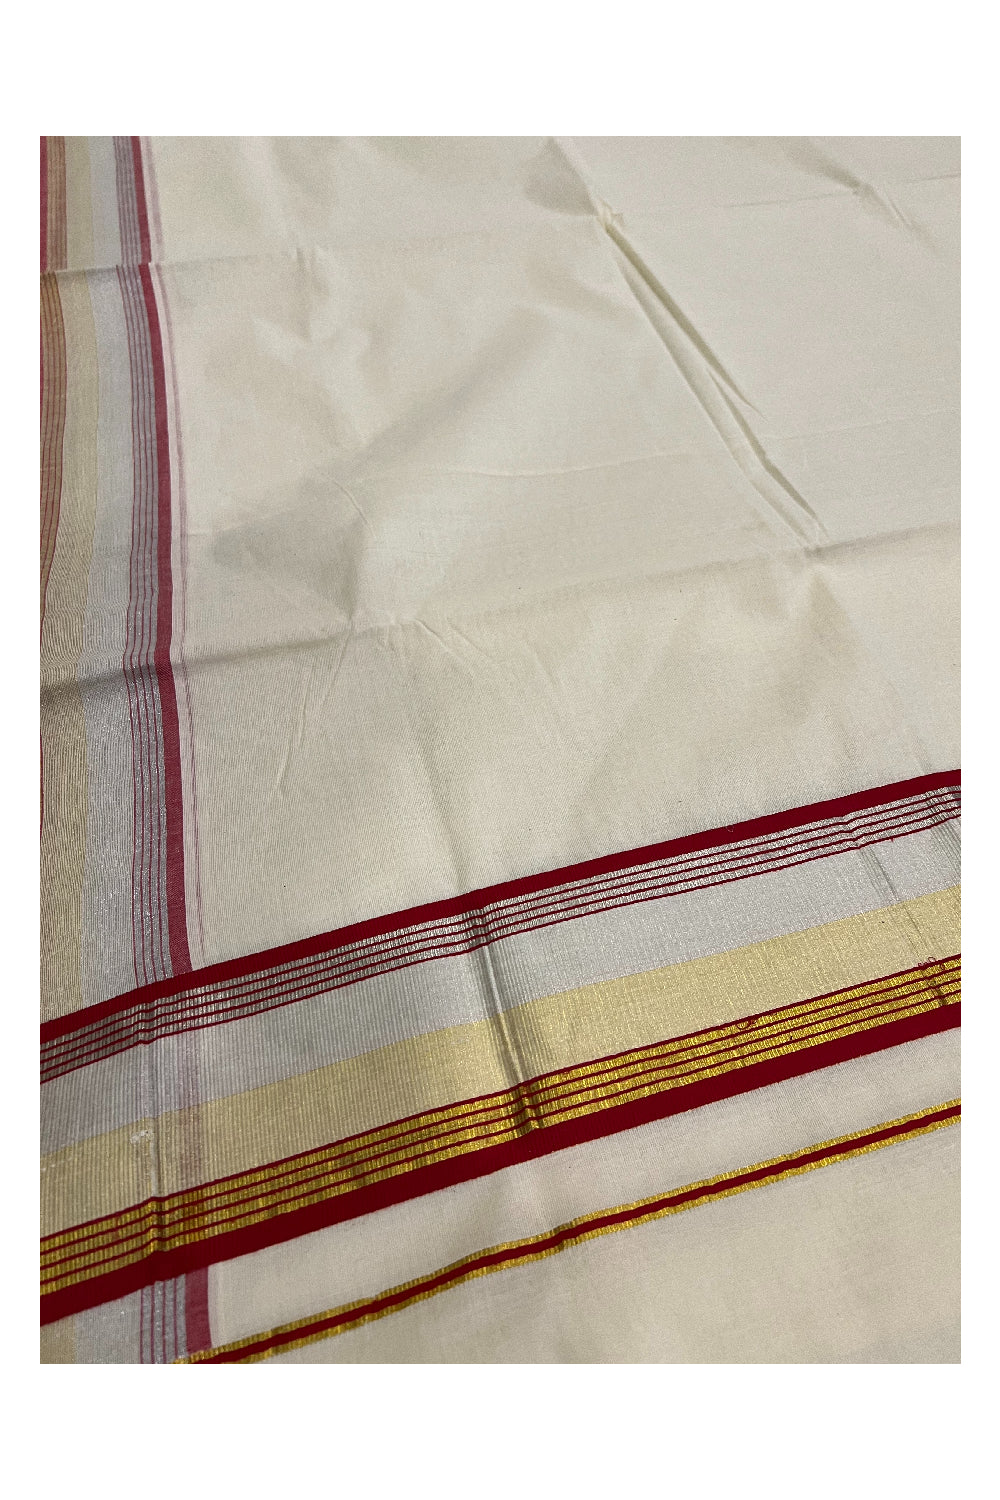 Kerala Cotton Saree with Silver Golden Kasavu and Red Border